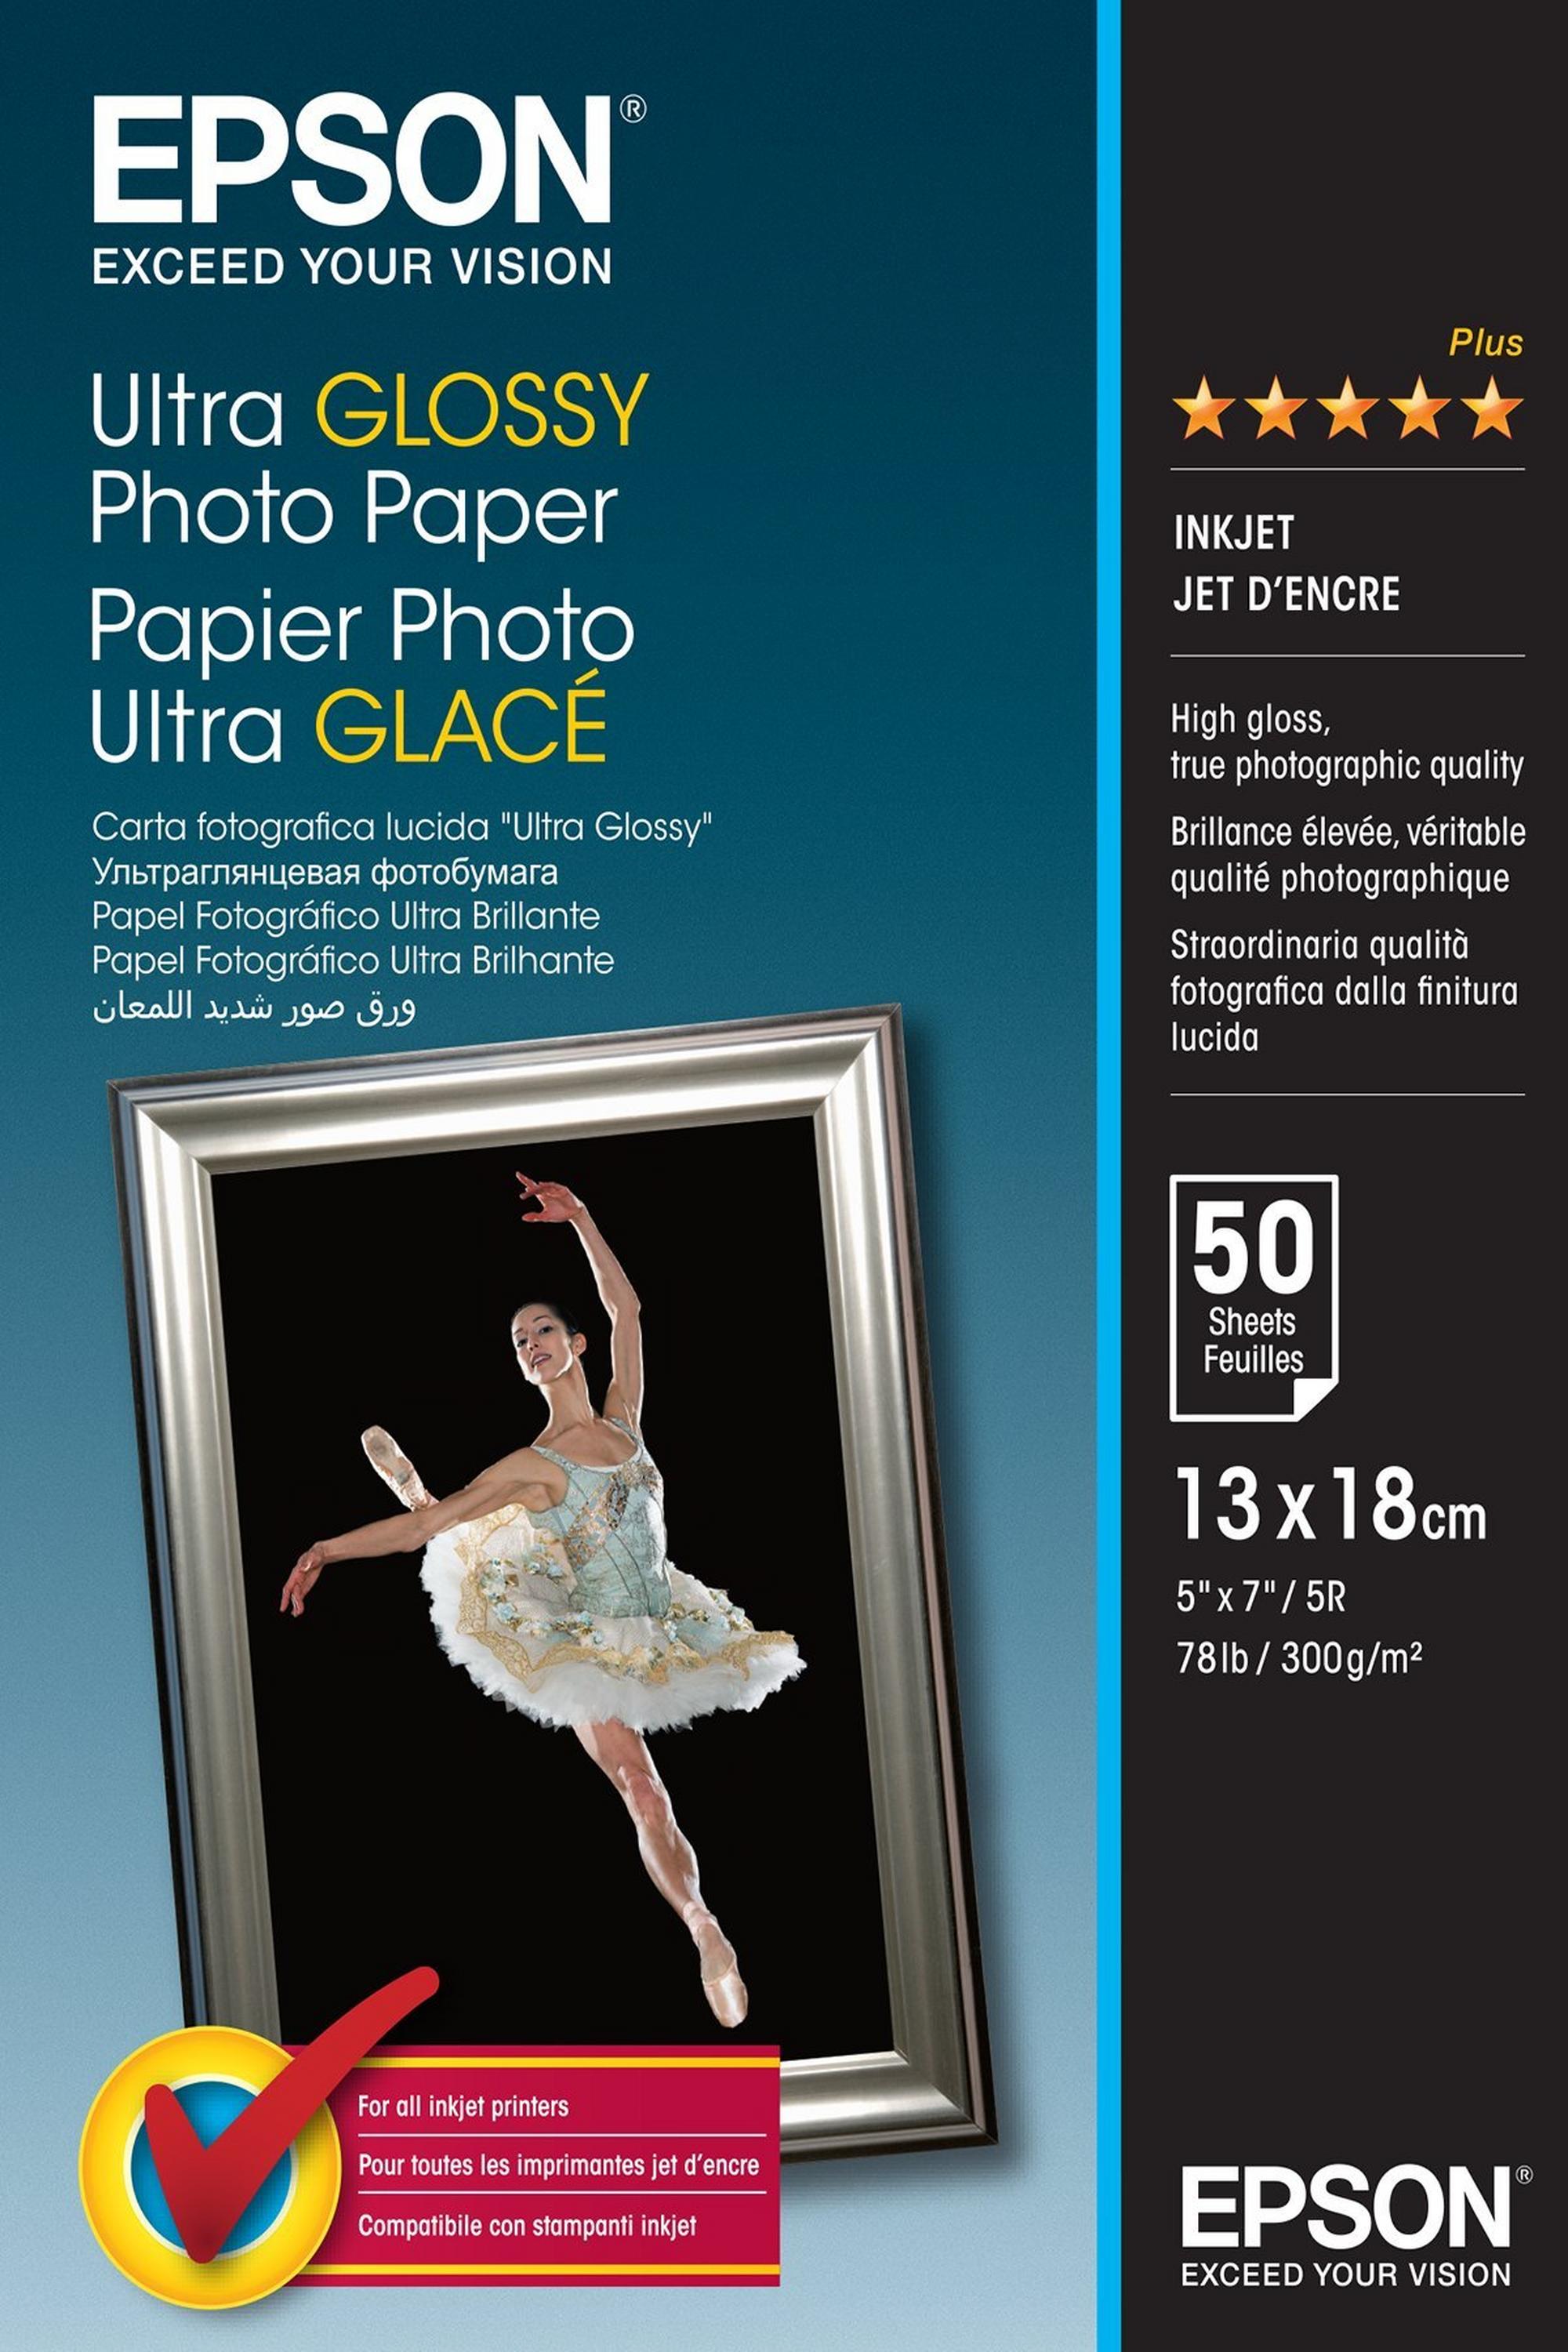 Epson Ultra Glossy Photo Paper - 13x18cm, 300g/m² - 50 Sheets